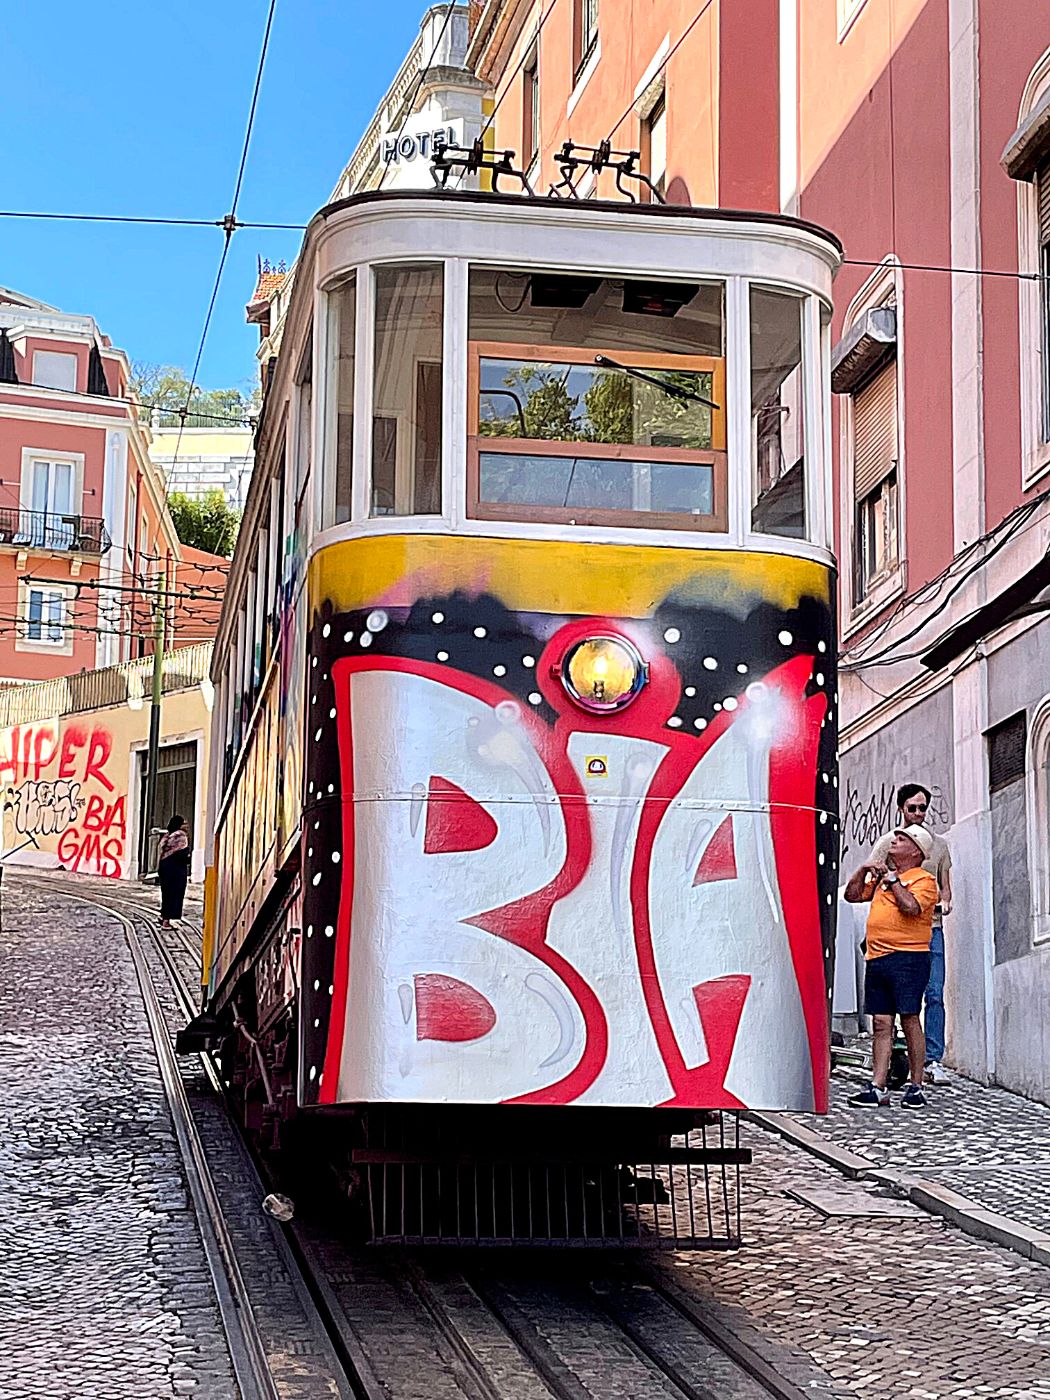 Ascensor da Gloria, the funicular from Baixa to Bairro Alto